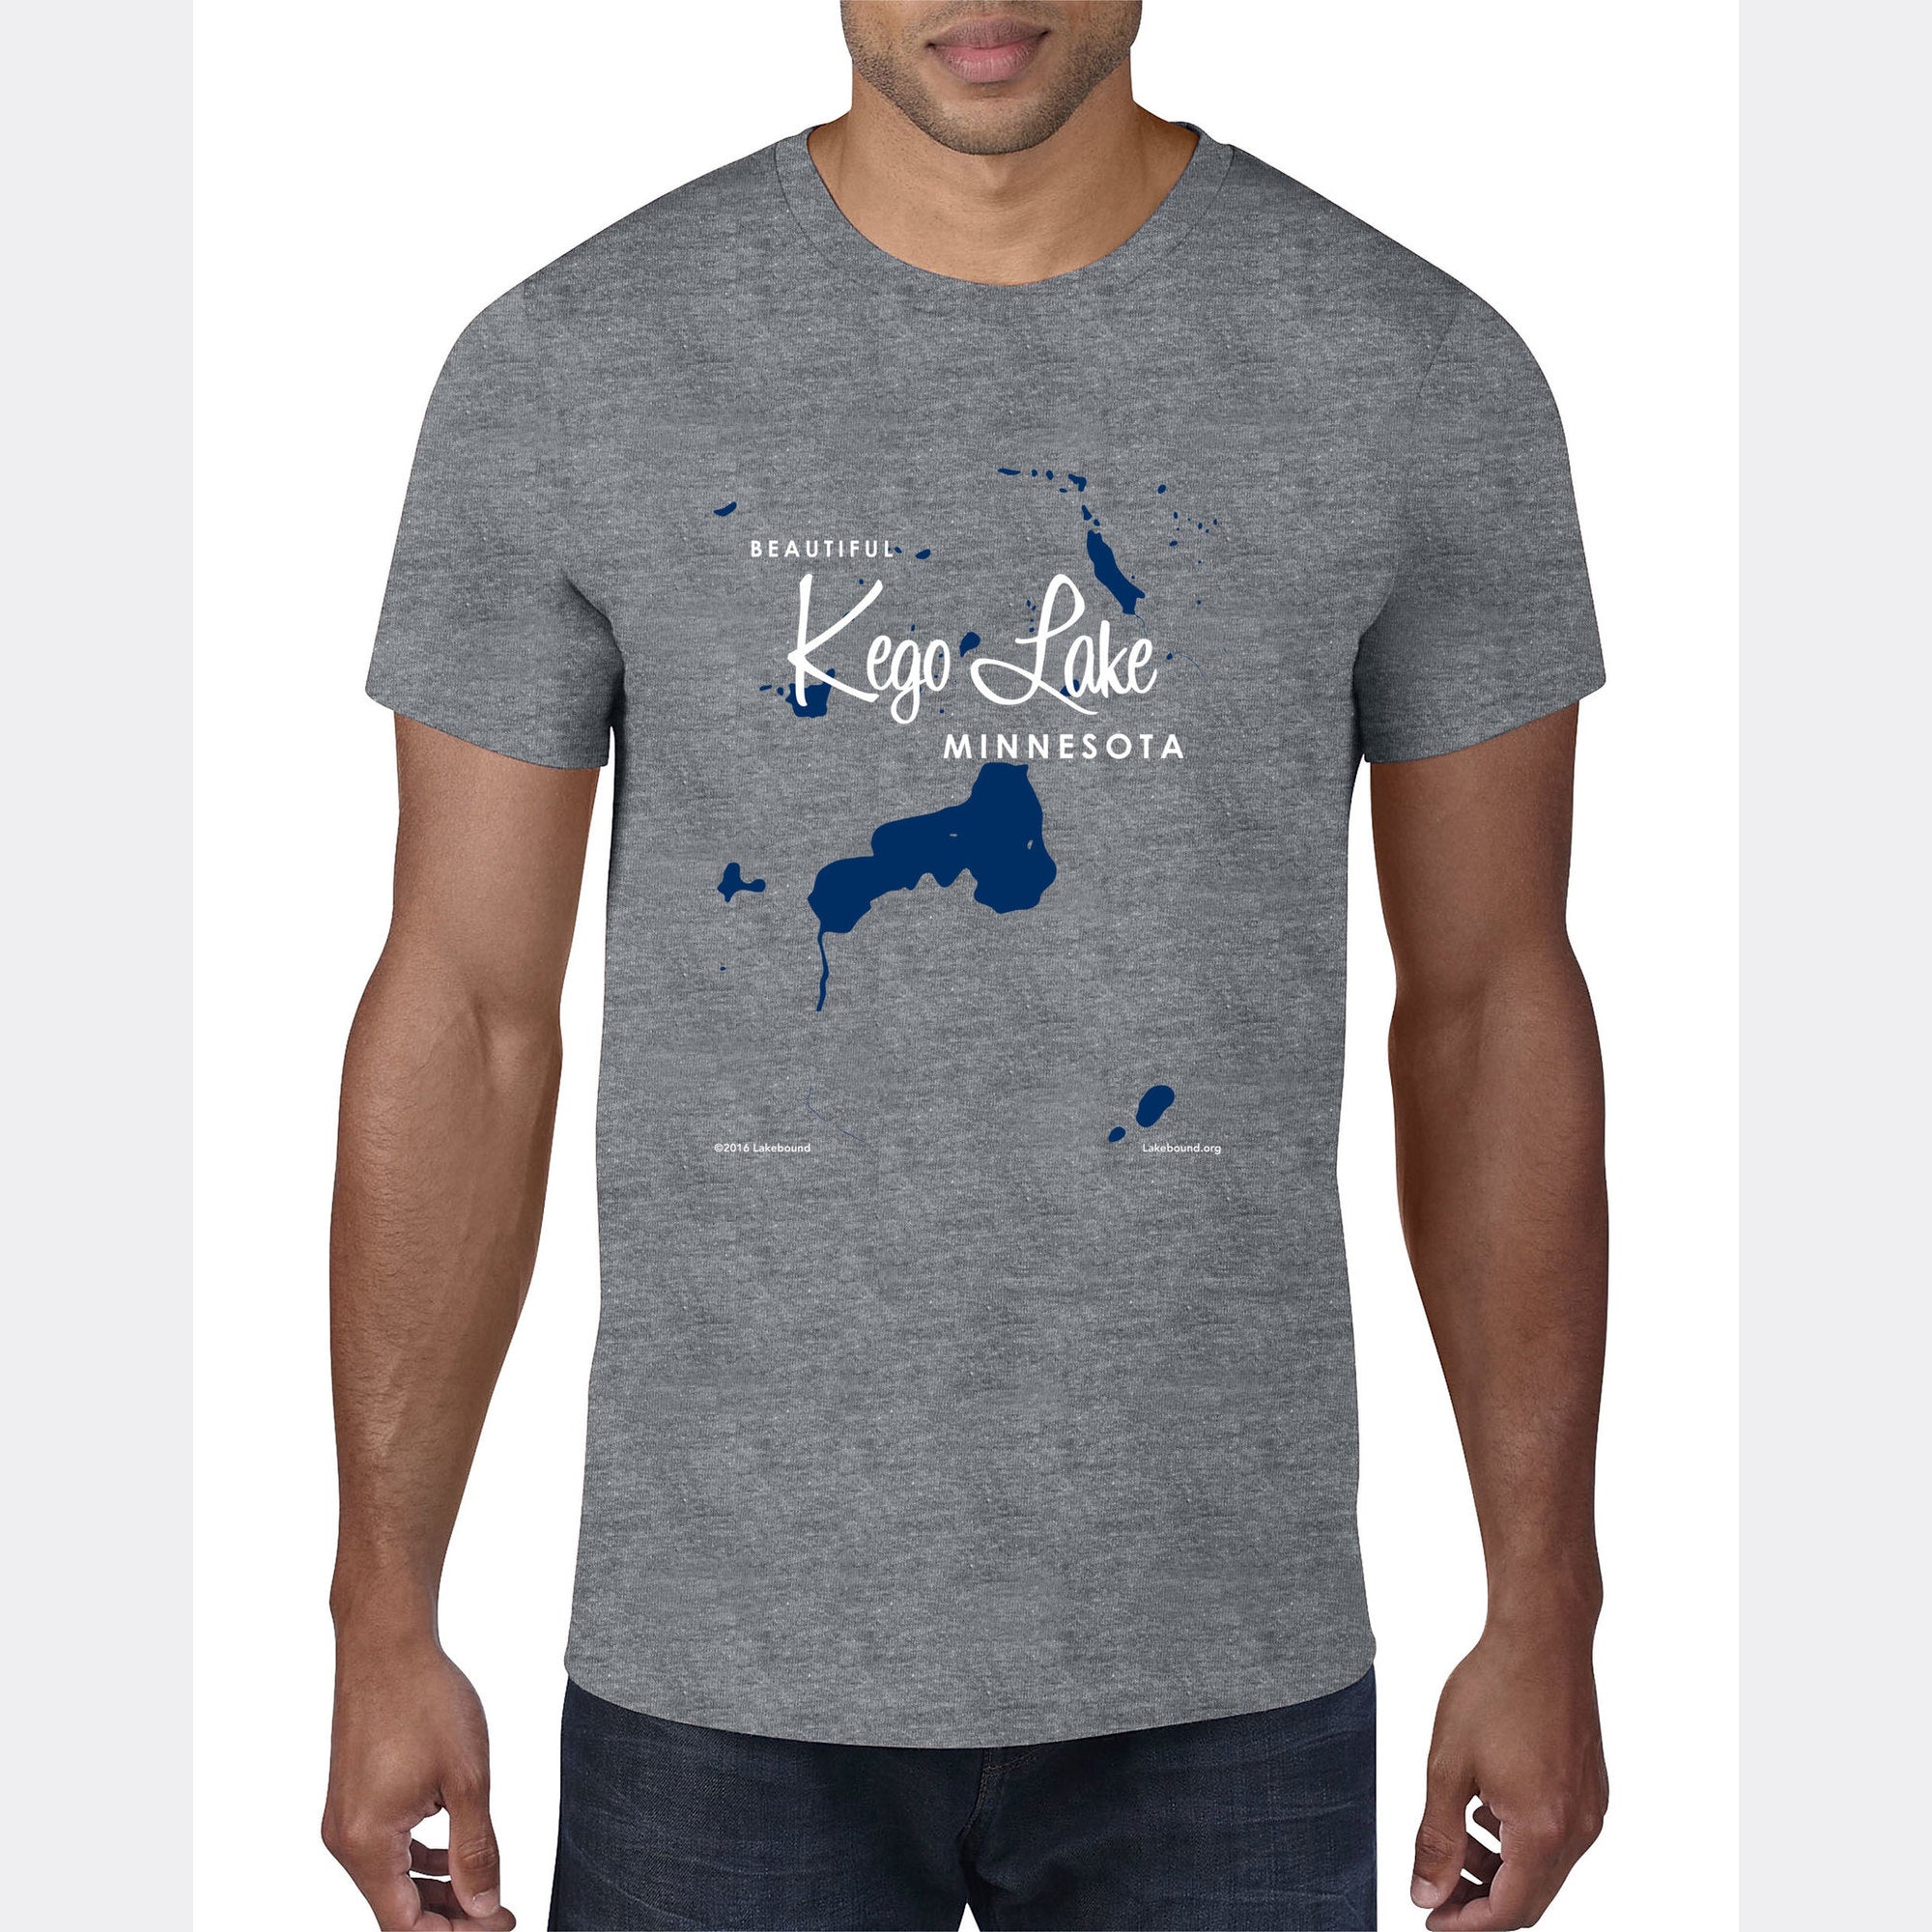 Kego Lake Minnesota, T-Shirt